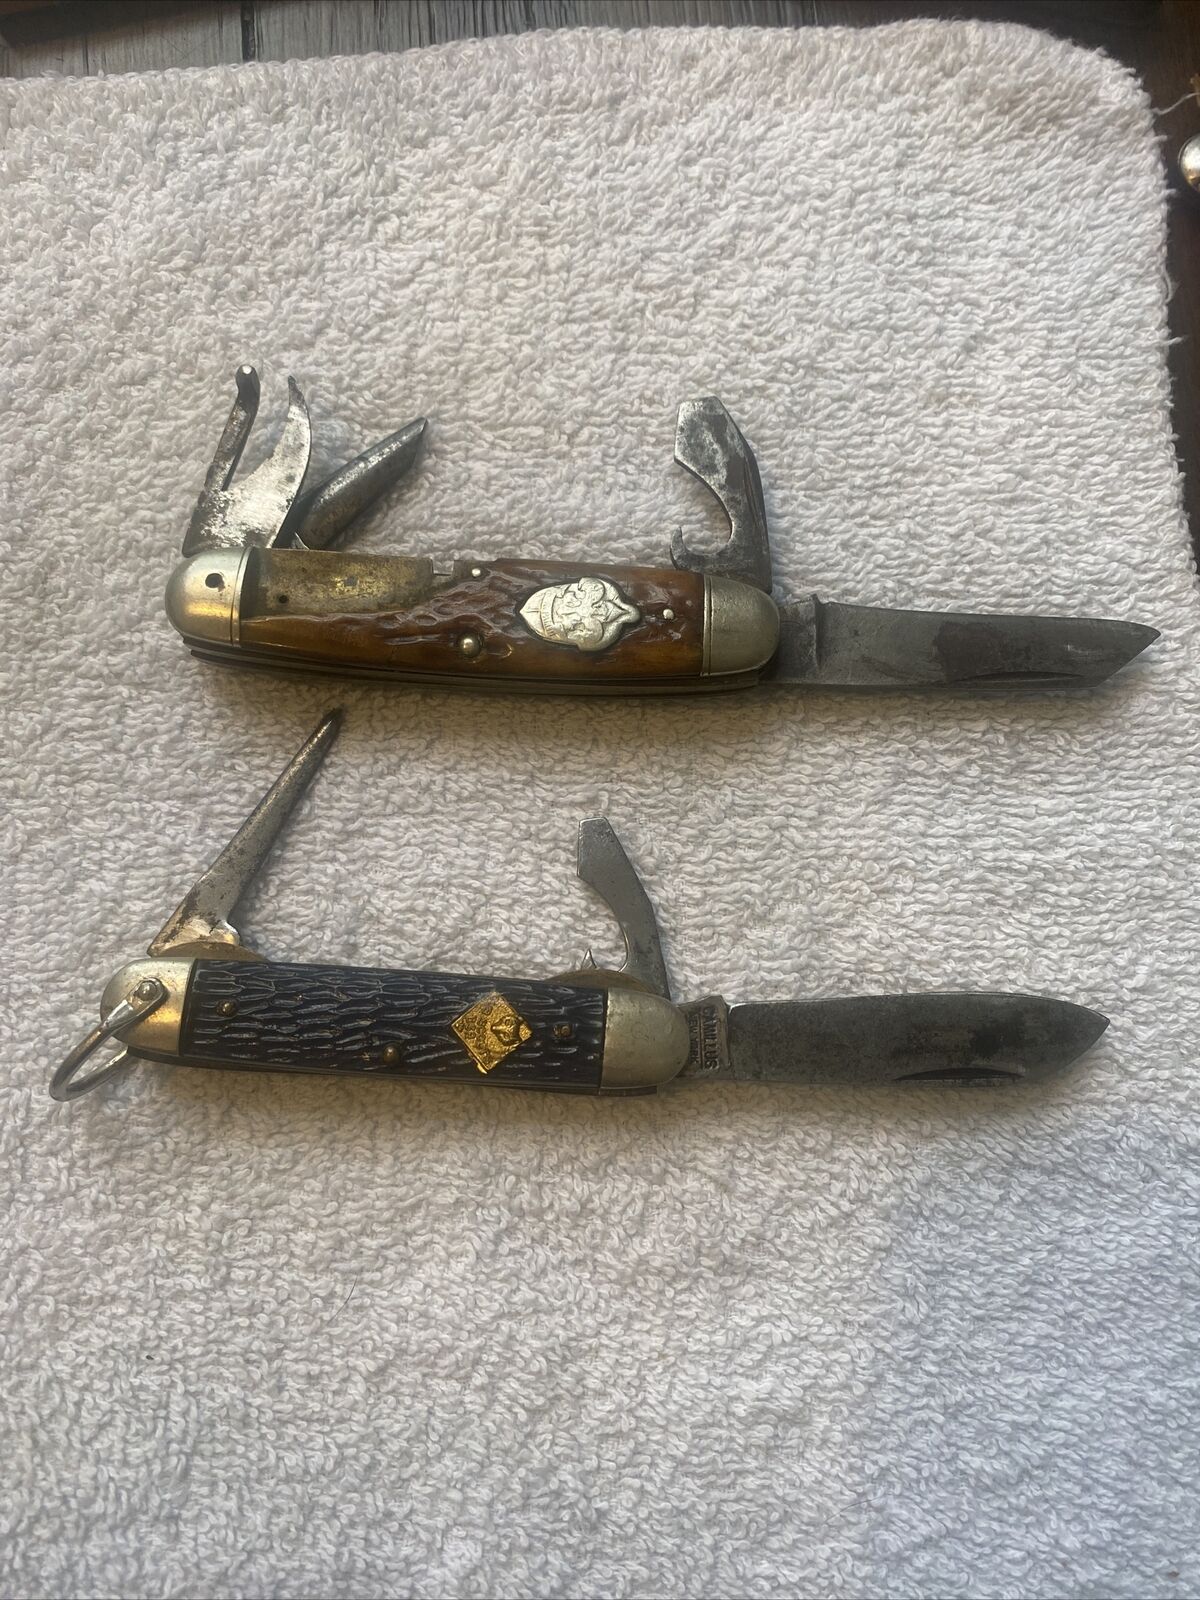 Vintage Camillus cub scout 3 tool knife. Nice